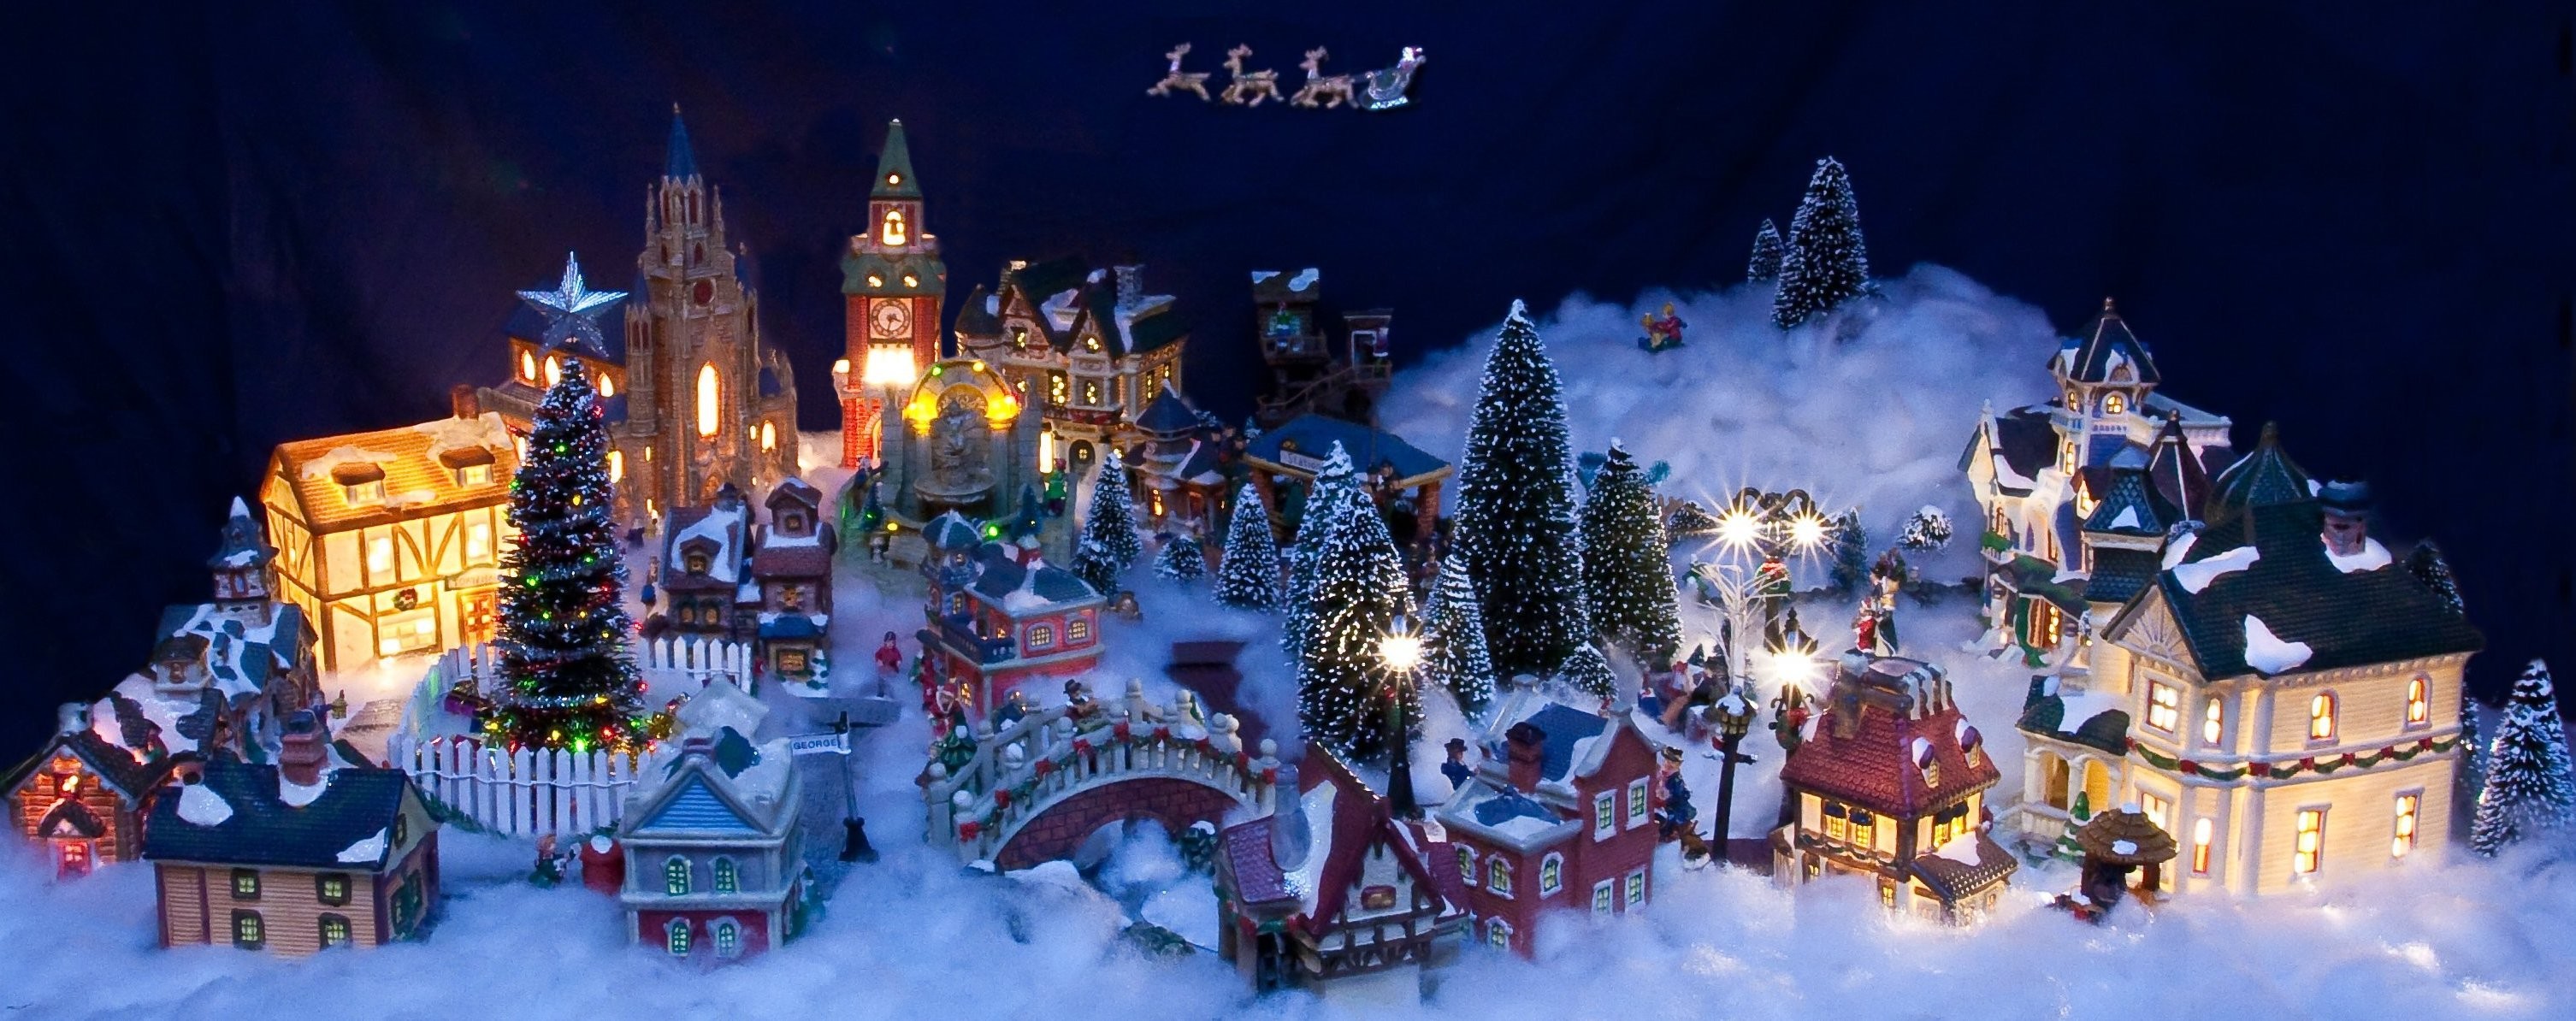 3012x1194 Christmas Village Scene (24)